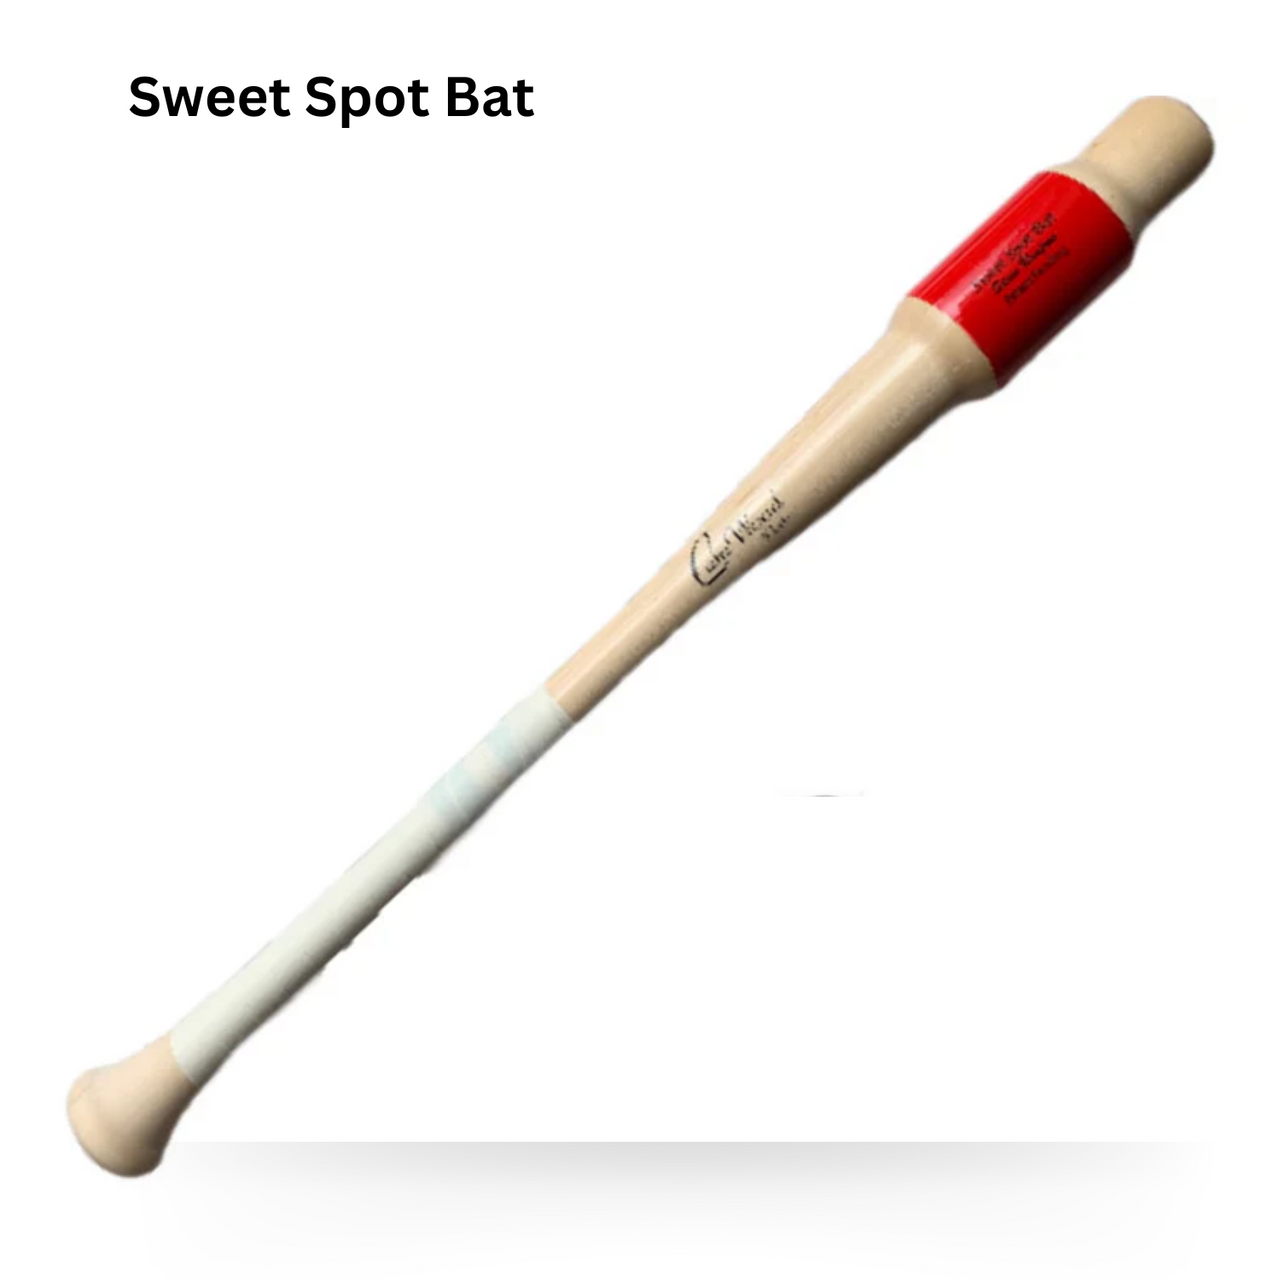 Sweet Spot Bat